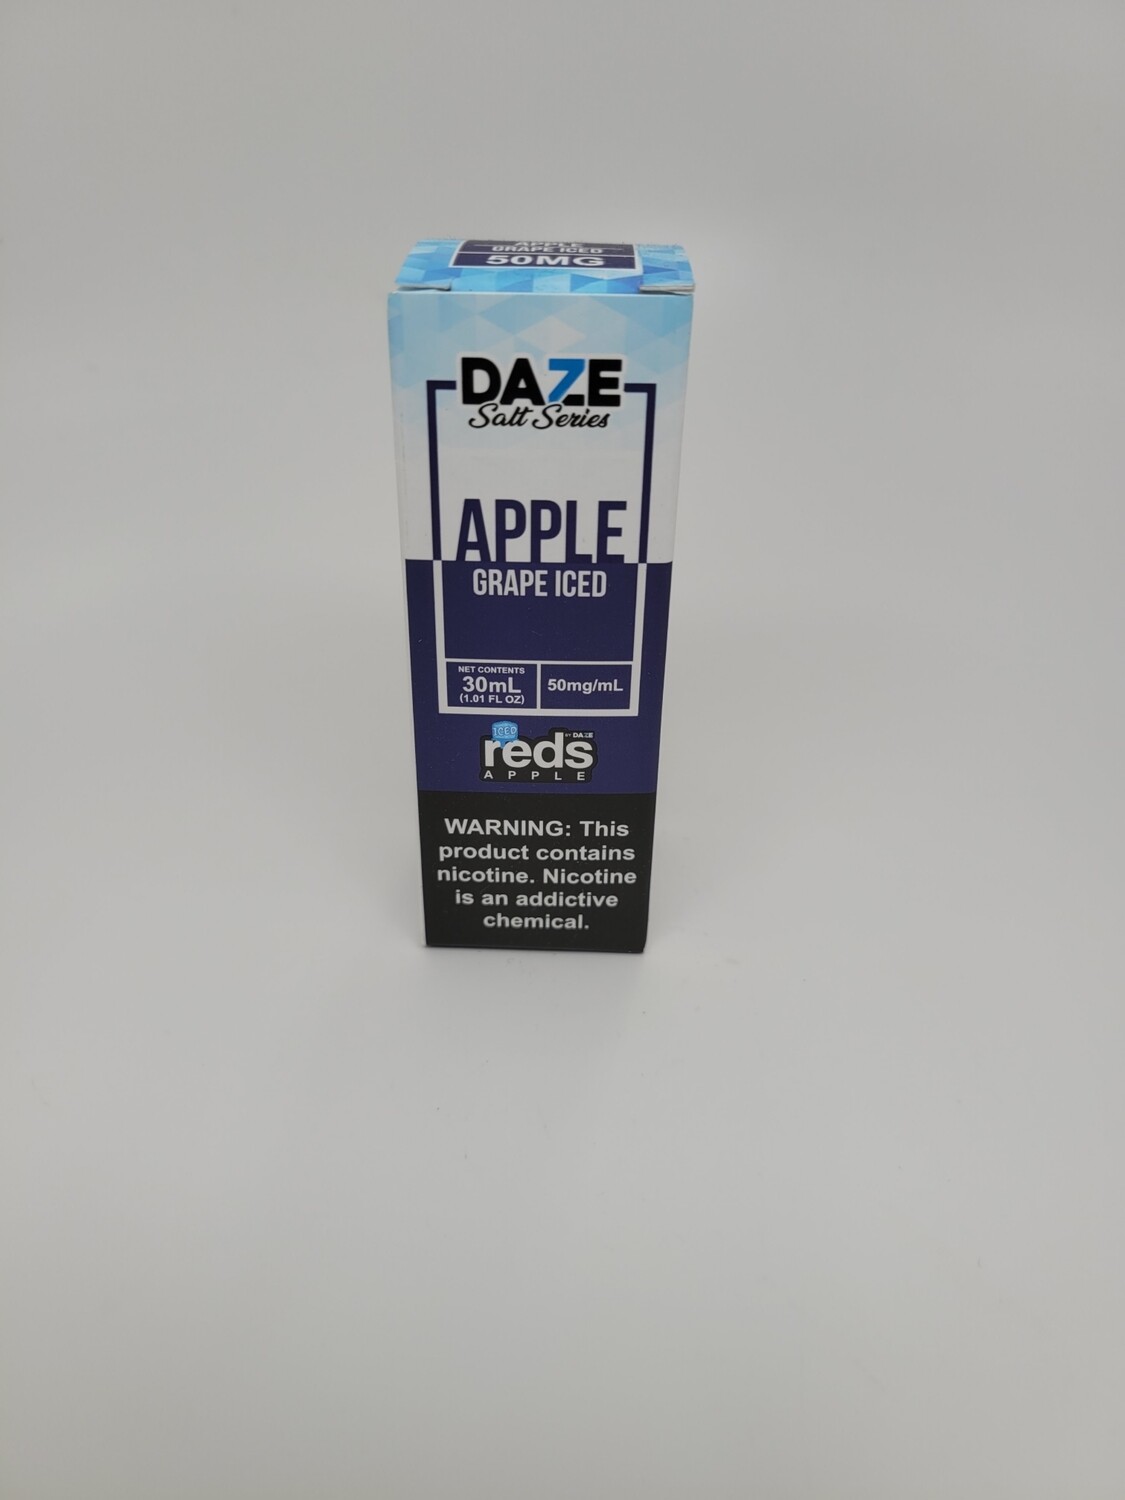 Daze salts Apple Grape iced